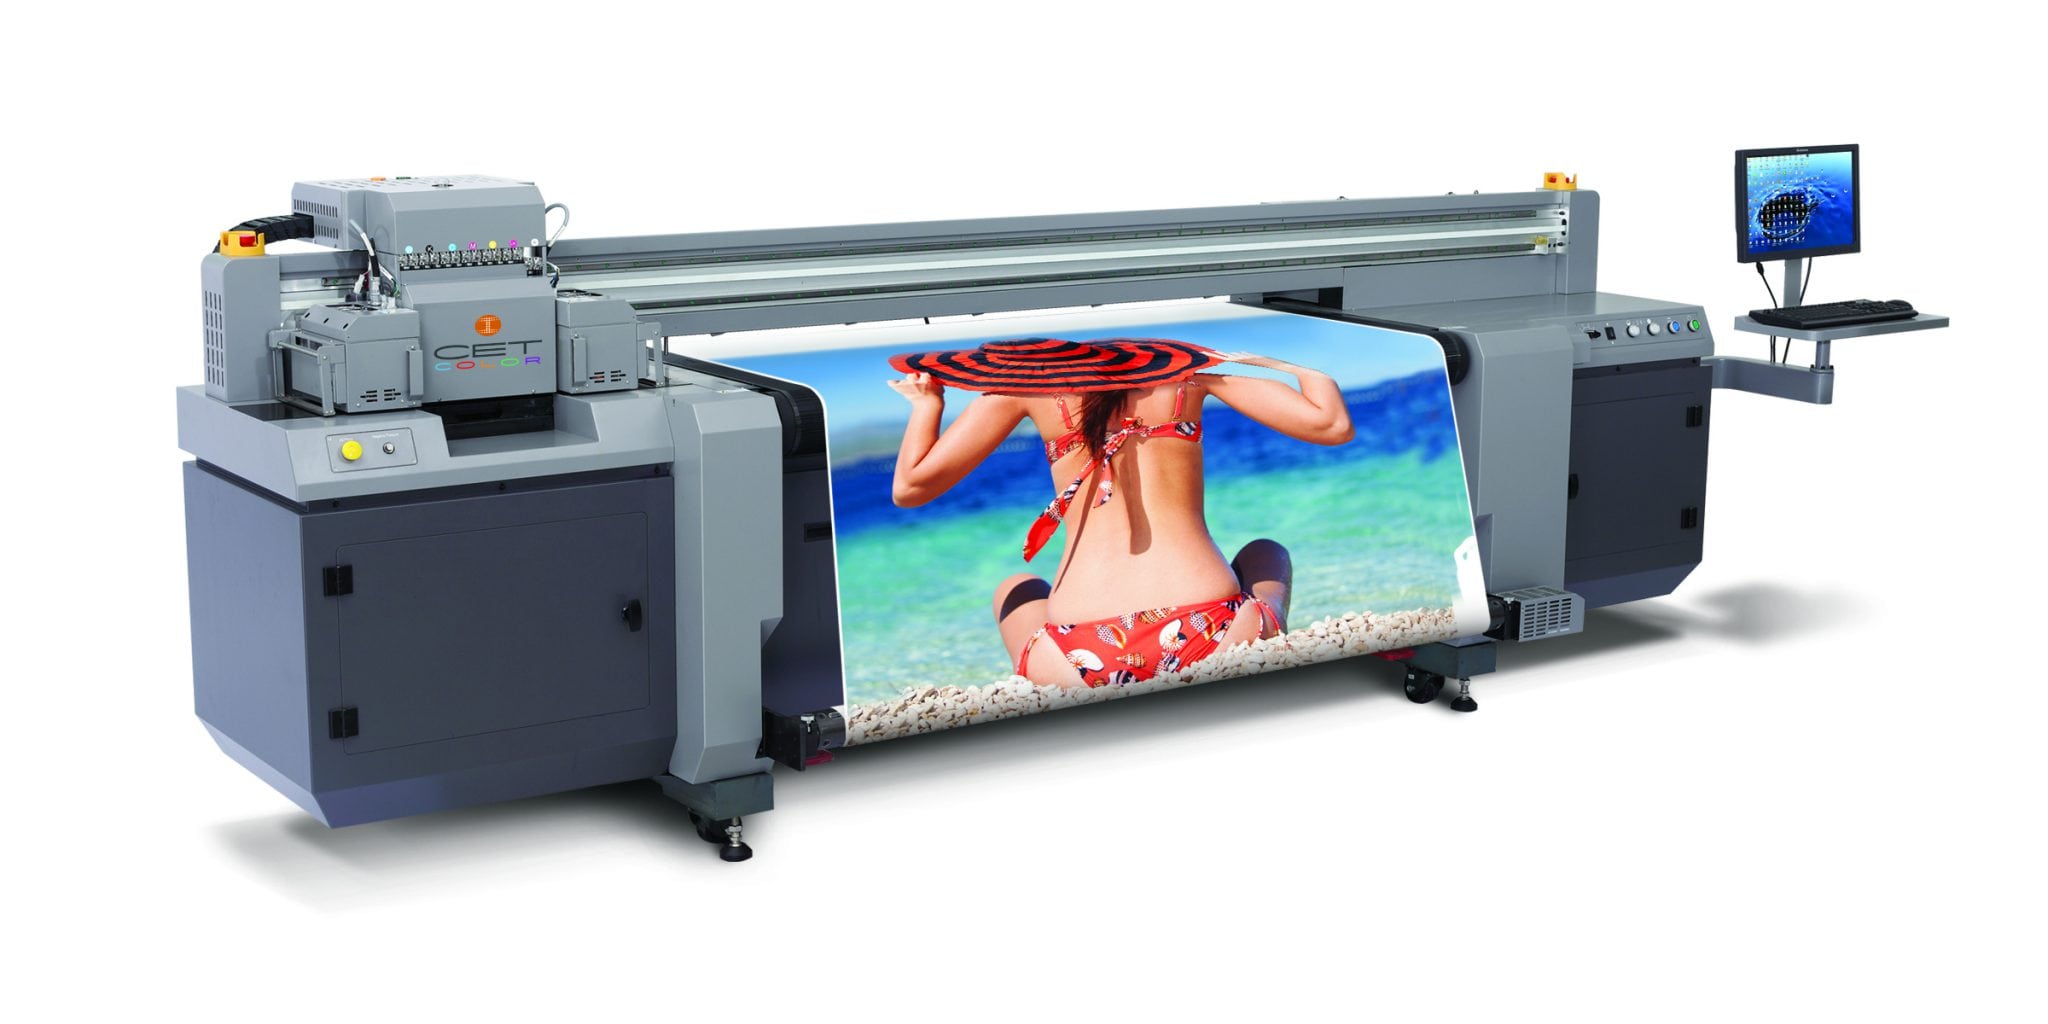 64″ Hybrid UV Printer - Q5-250h